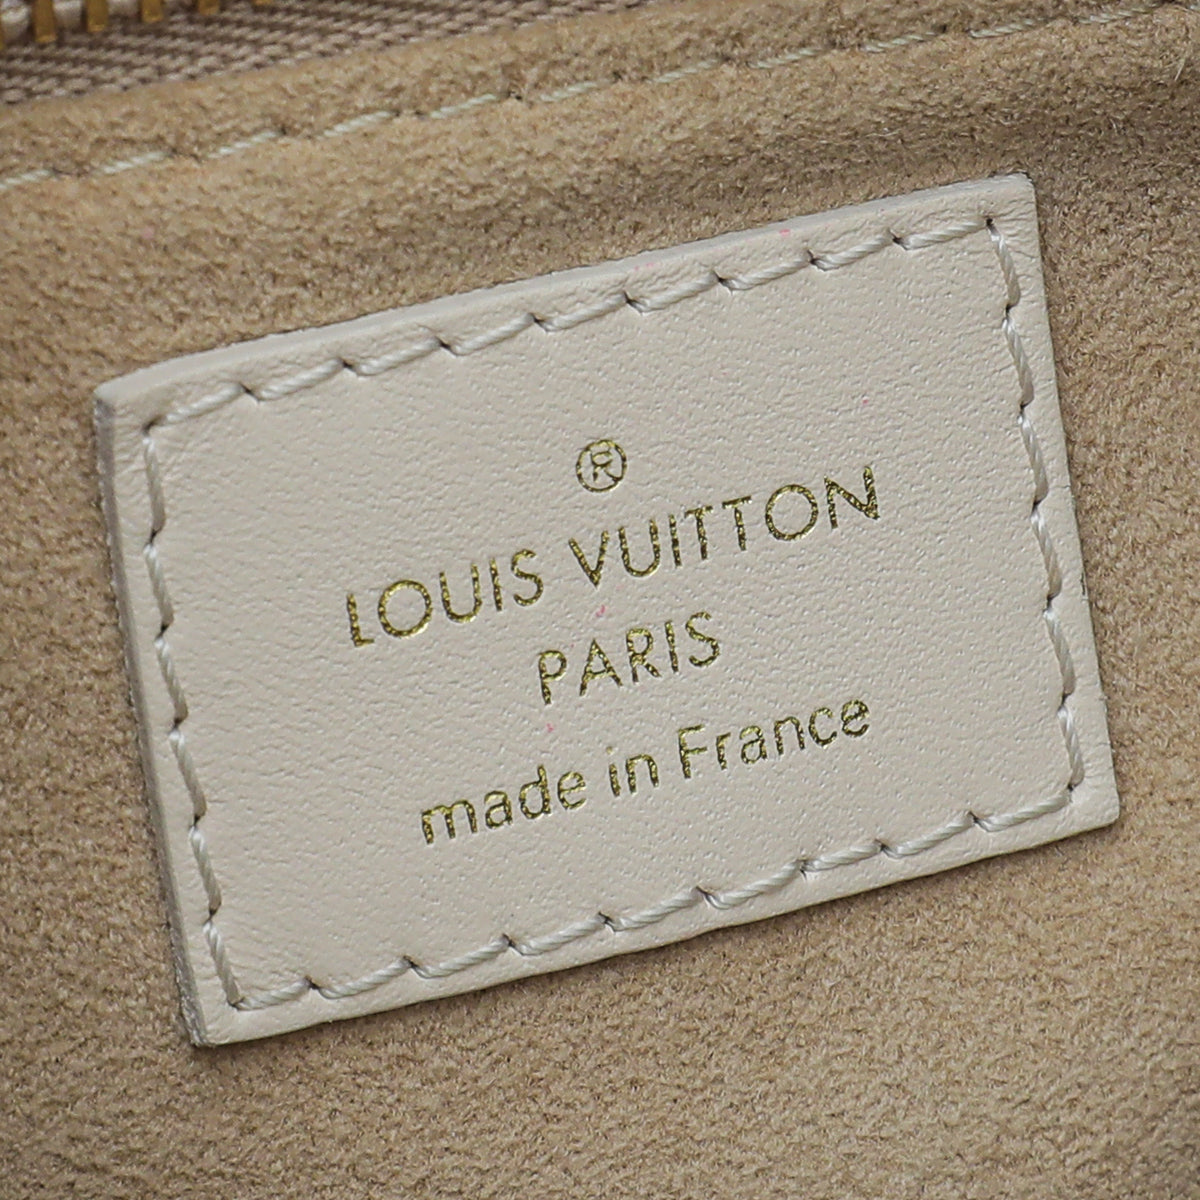 Louis Vuitton Empreinte Petite Malle Souple New Creme